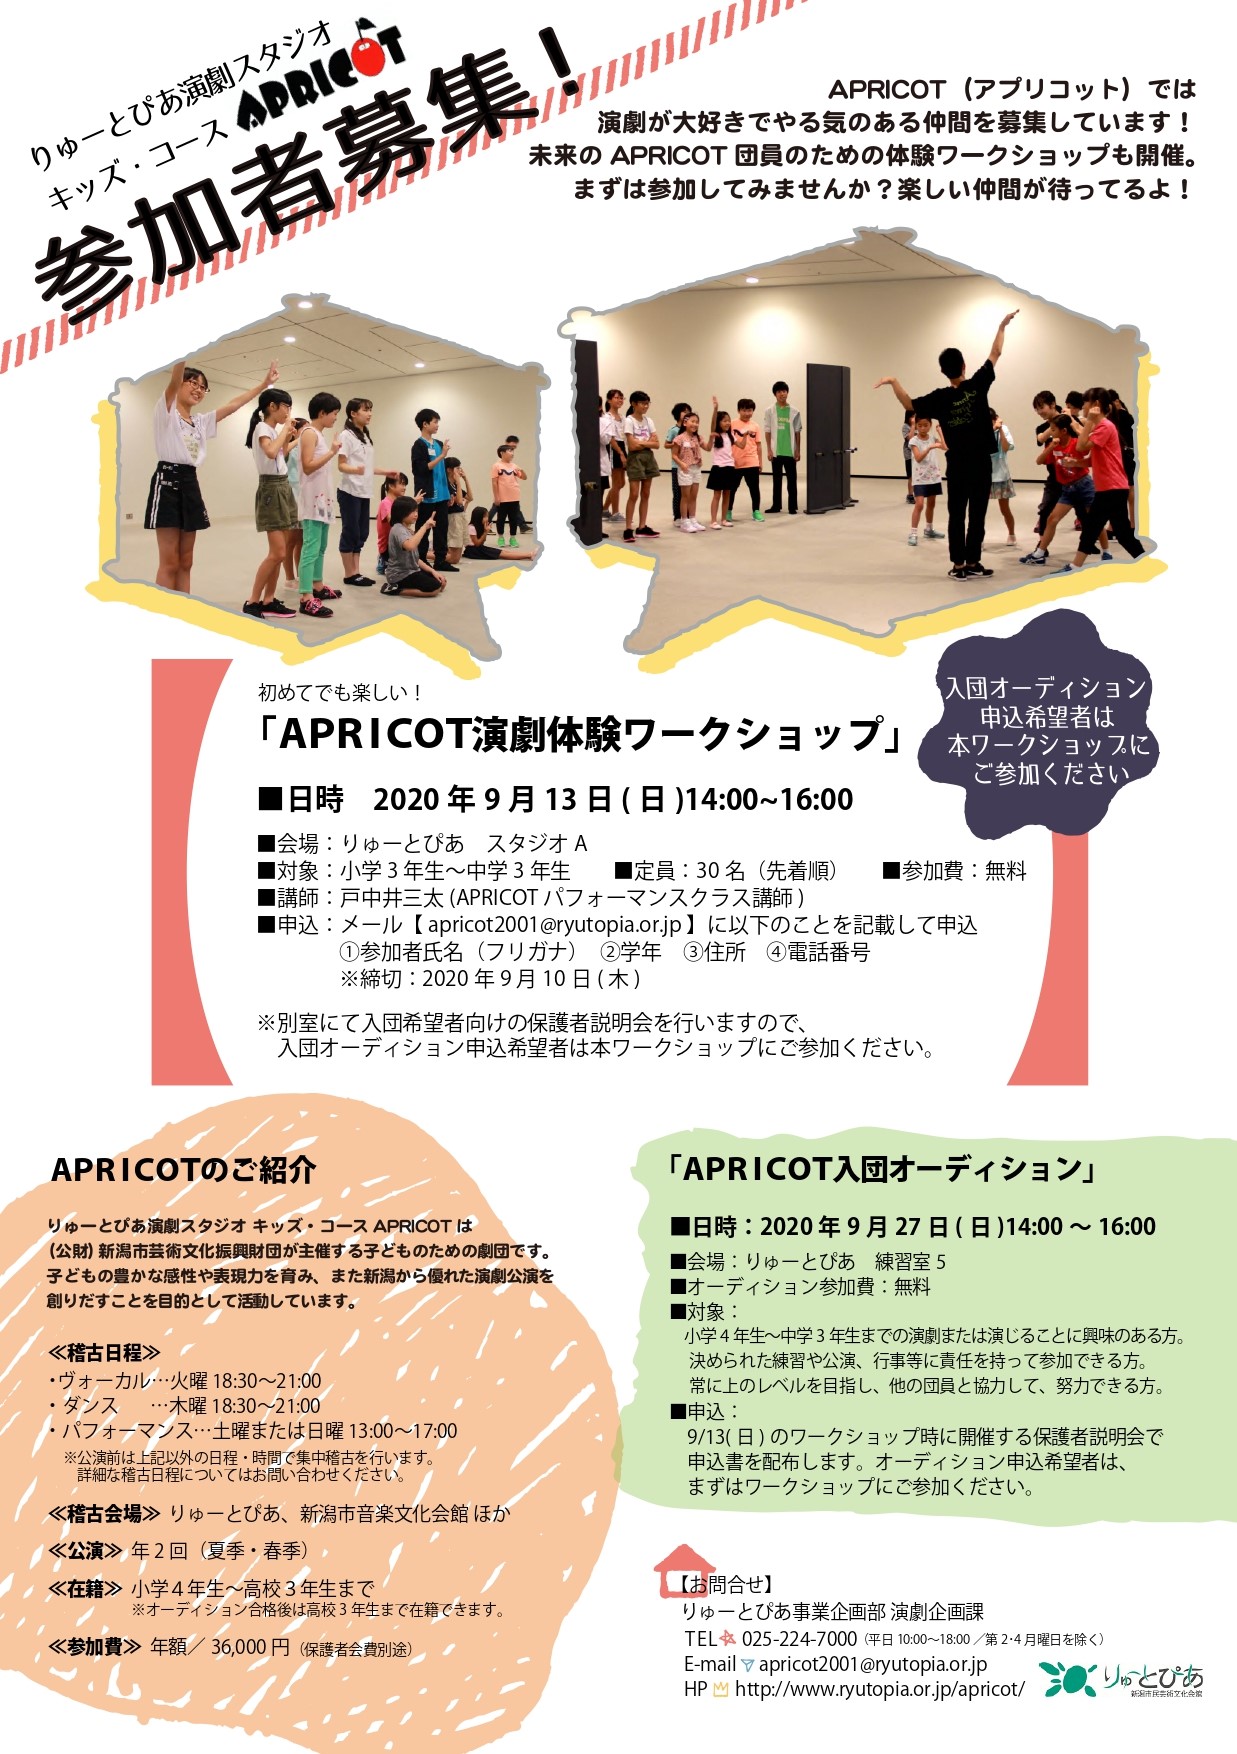 Apricot入団オーディション 年9月 公演情報 りゅーとぴあ 新潟市民芸術文化会館